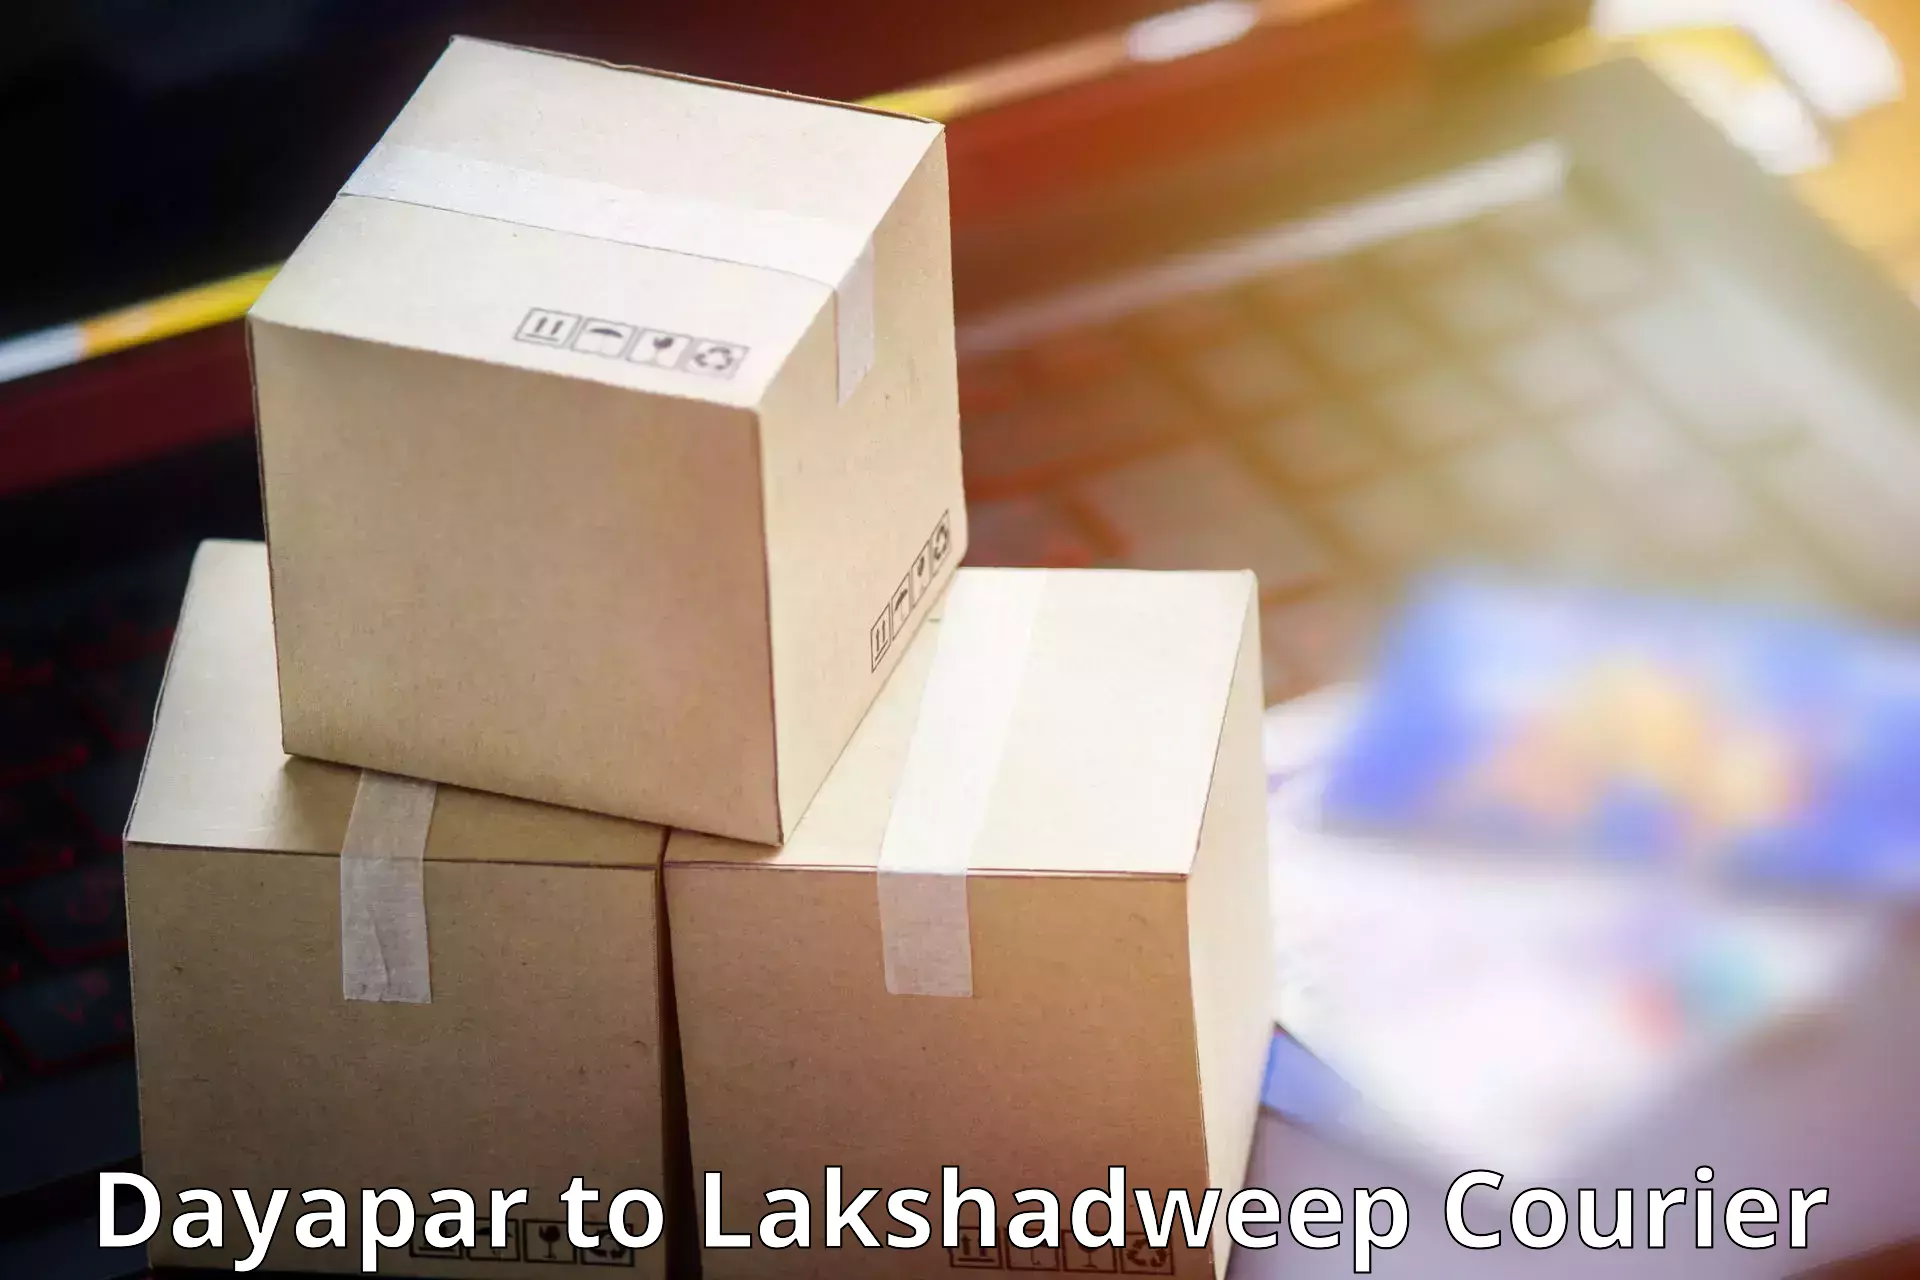 Modern delivery methods Dayapar to Lakshadweep